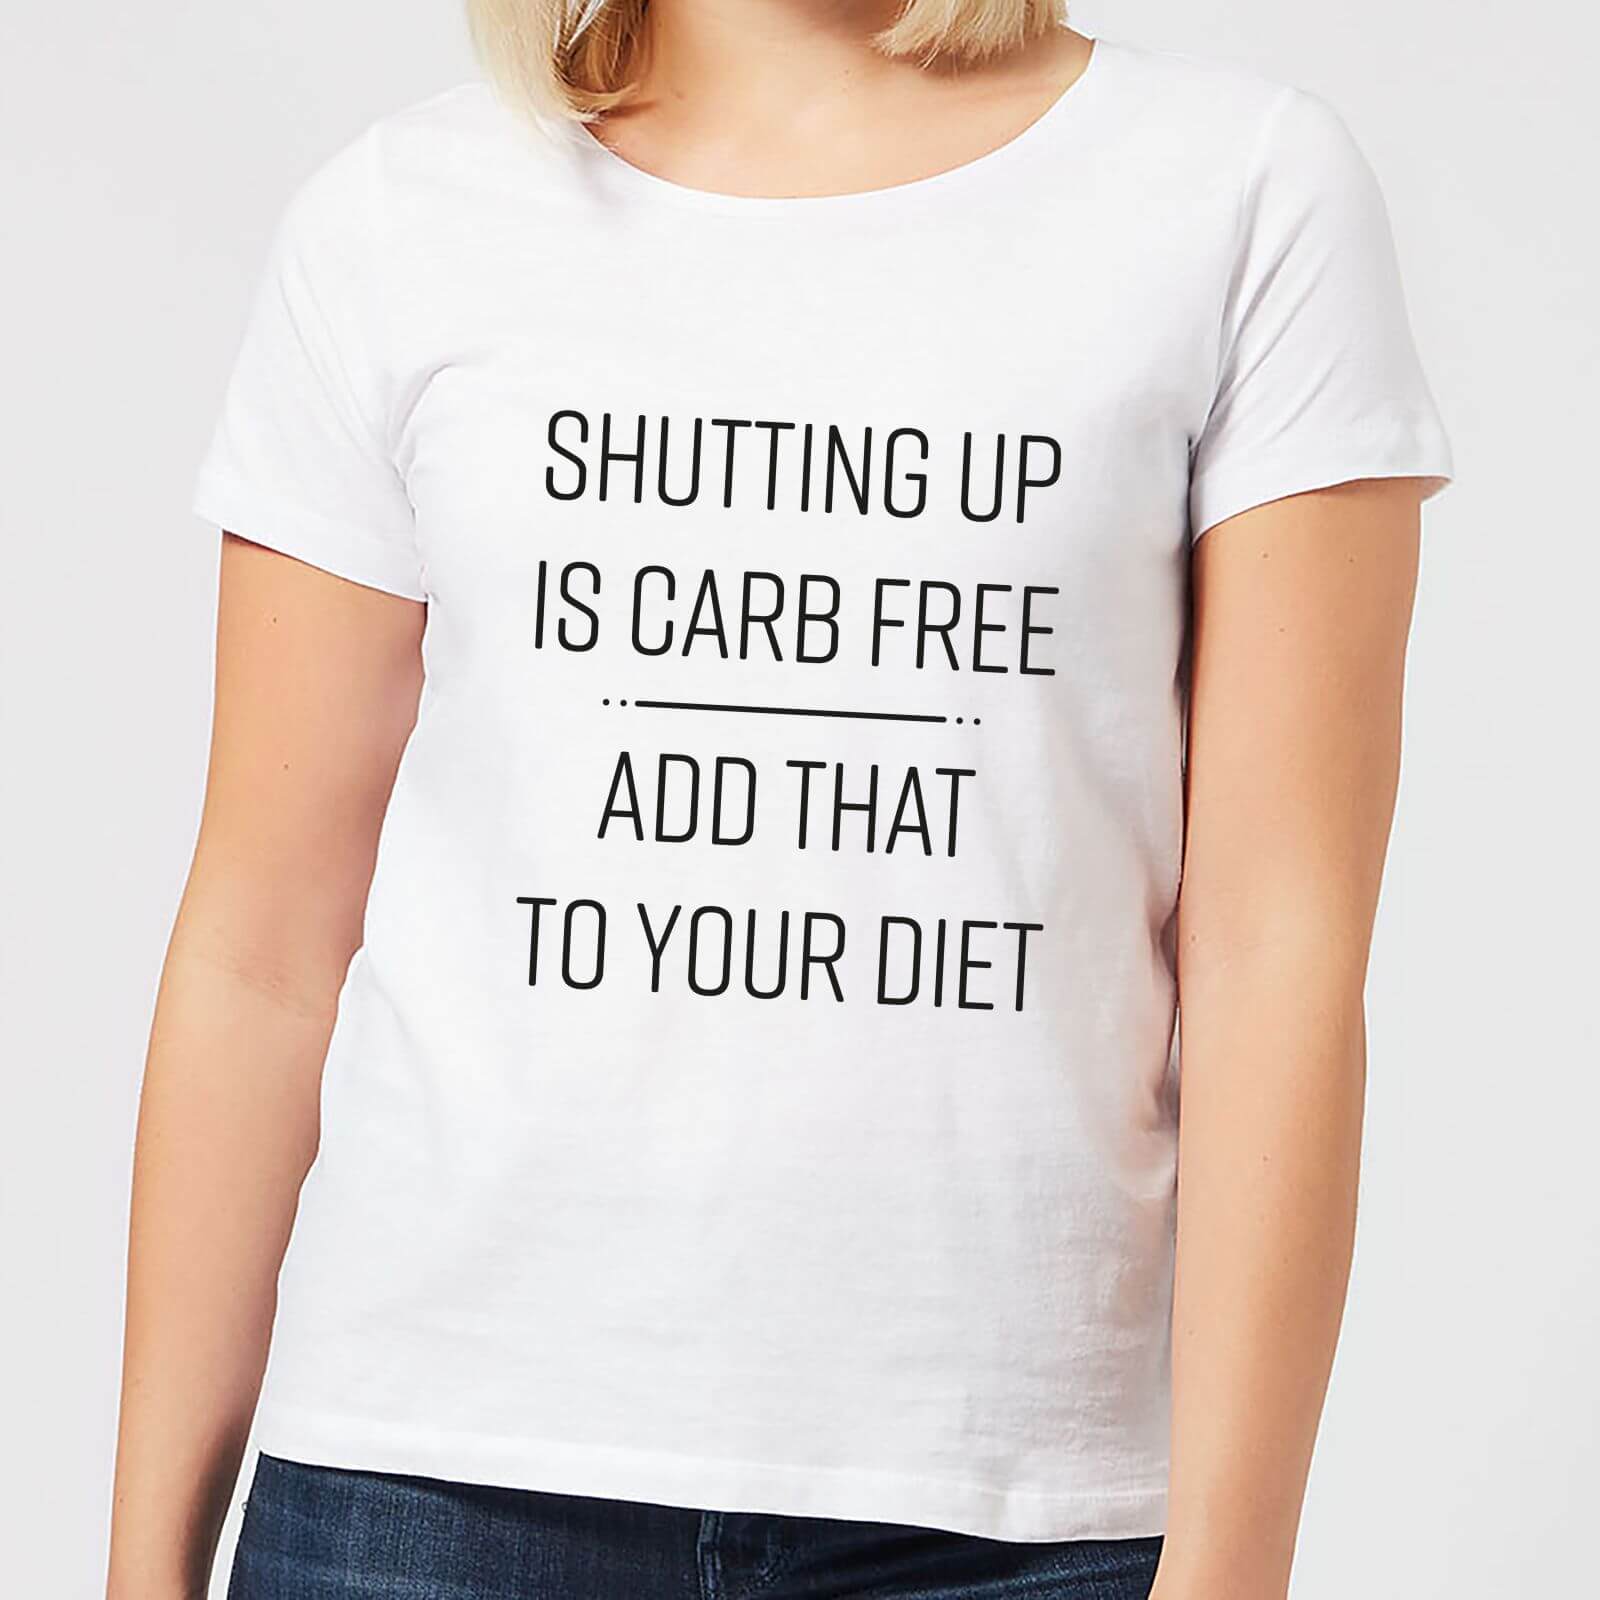 Shutting Up Is Carb Free Women's T-Shirt - White - XL - White